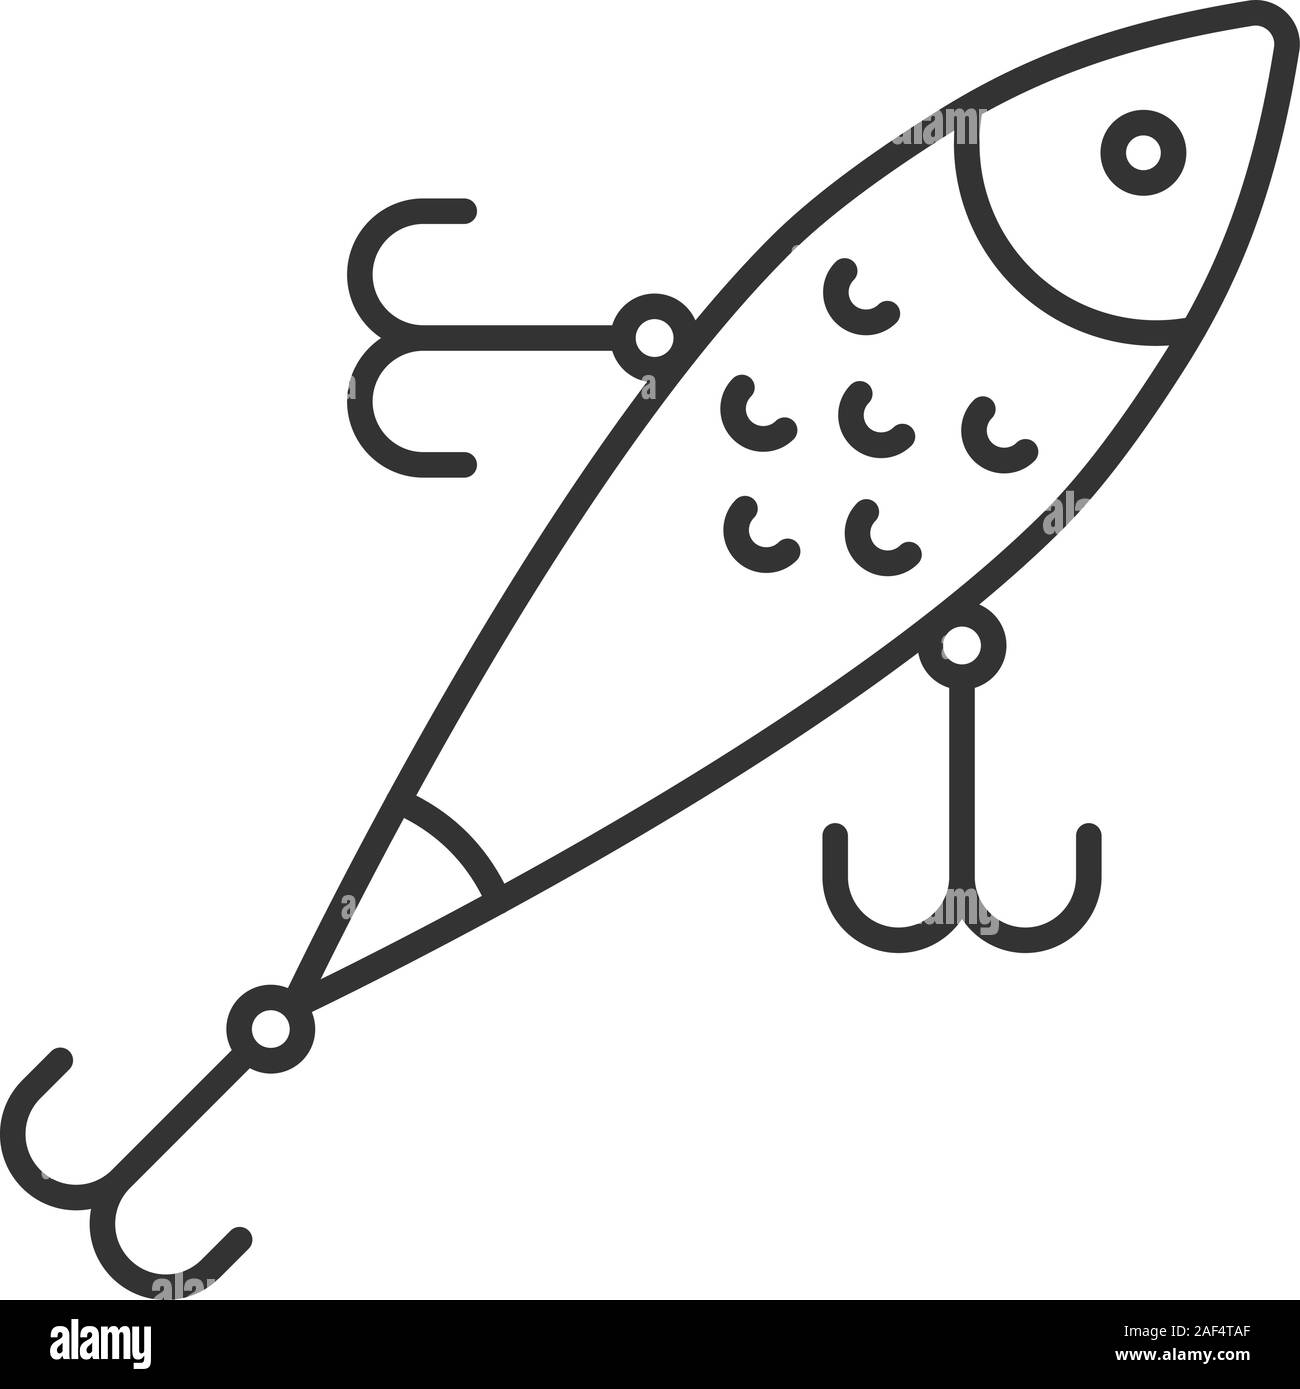 Lure linear icon. Thin line illustration. Spool bait. Fishing gear